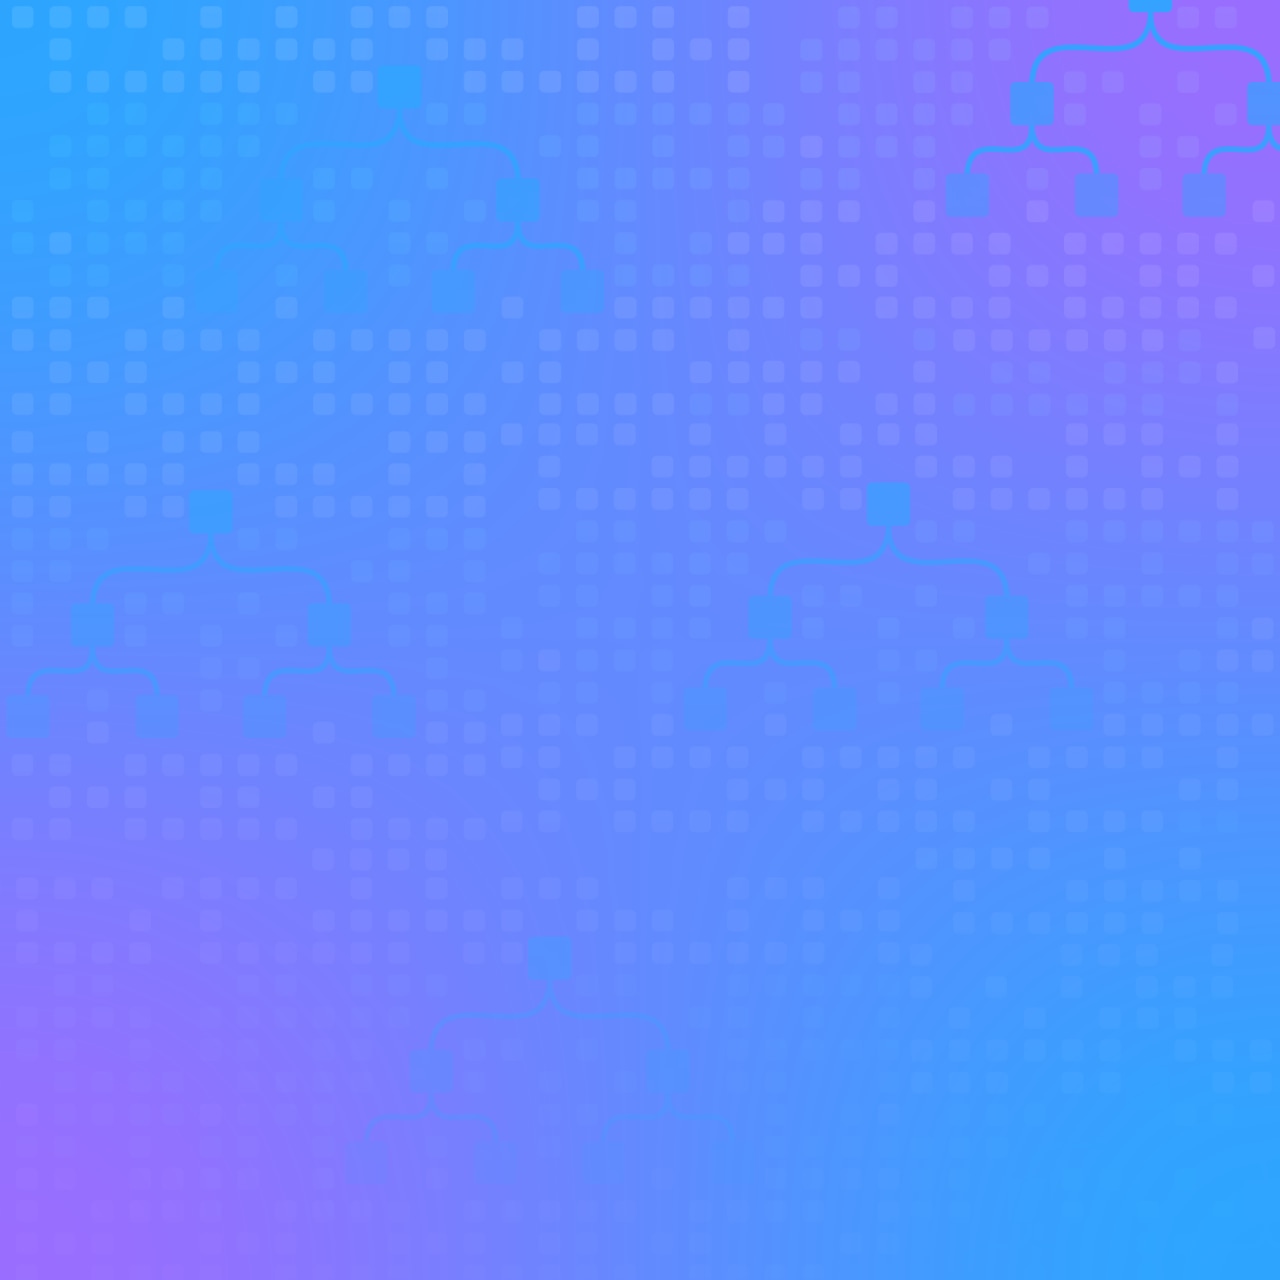 Decision tree graphics on blue violet gradient background